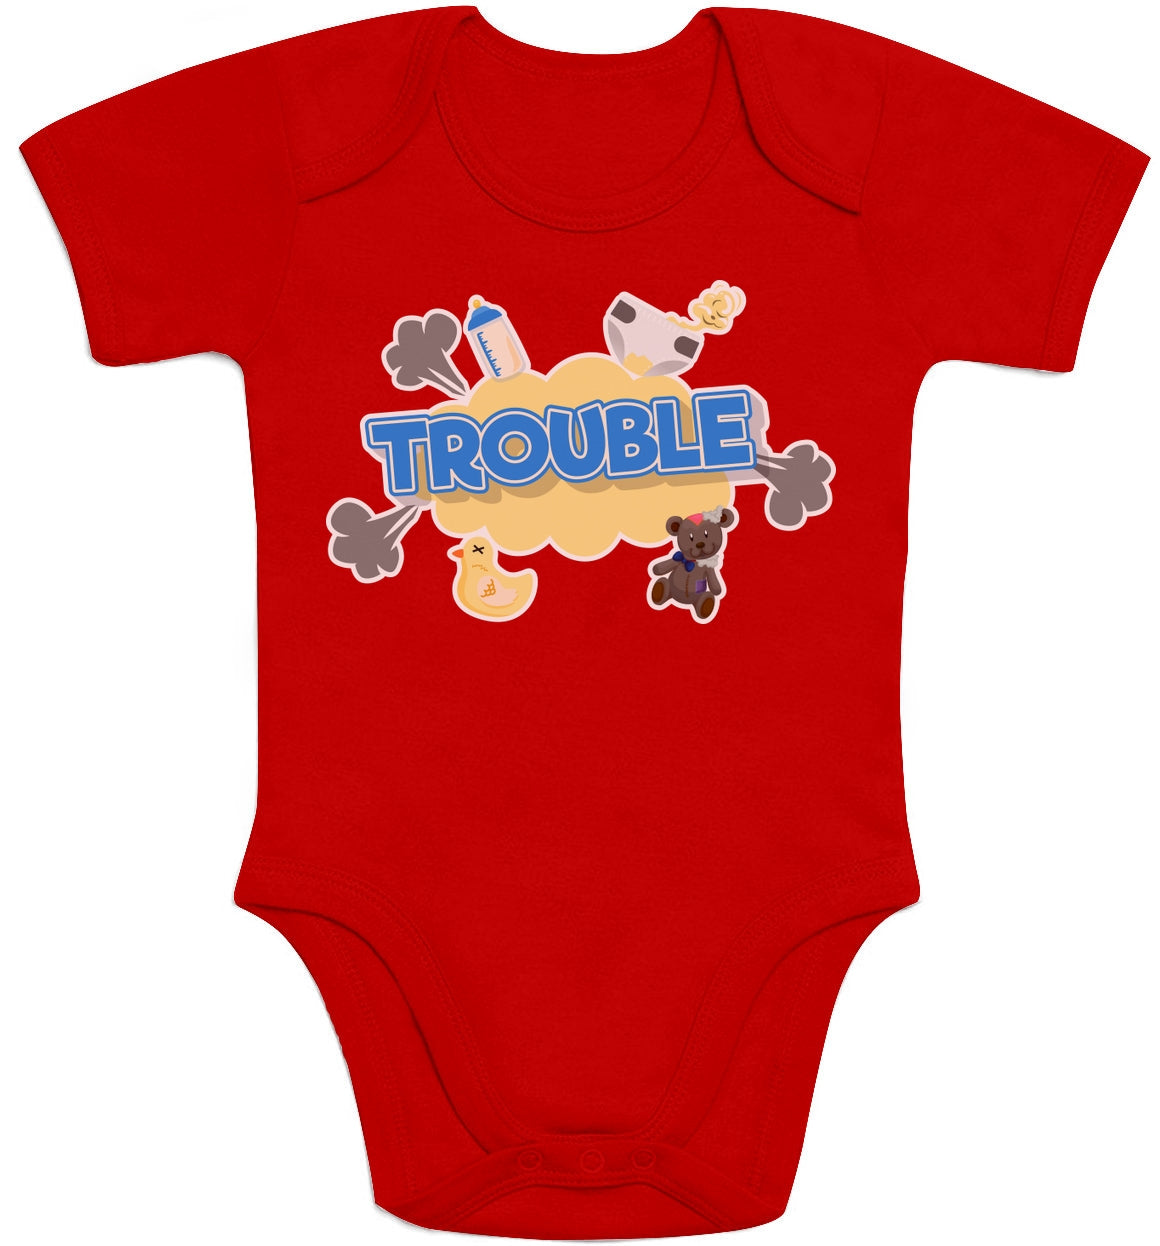 Trouble - Lustiger Spruch für Babies Baby Body Kurzarm-Body